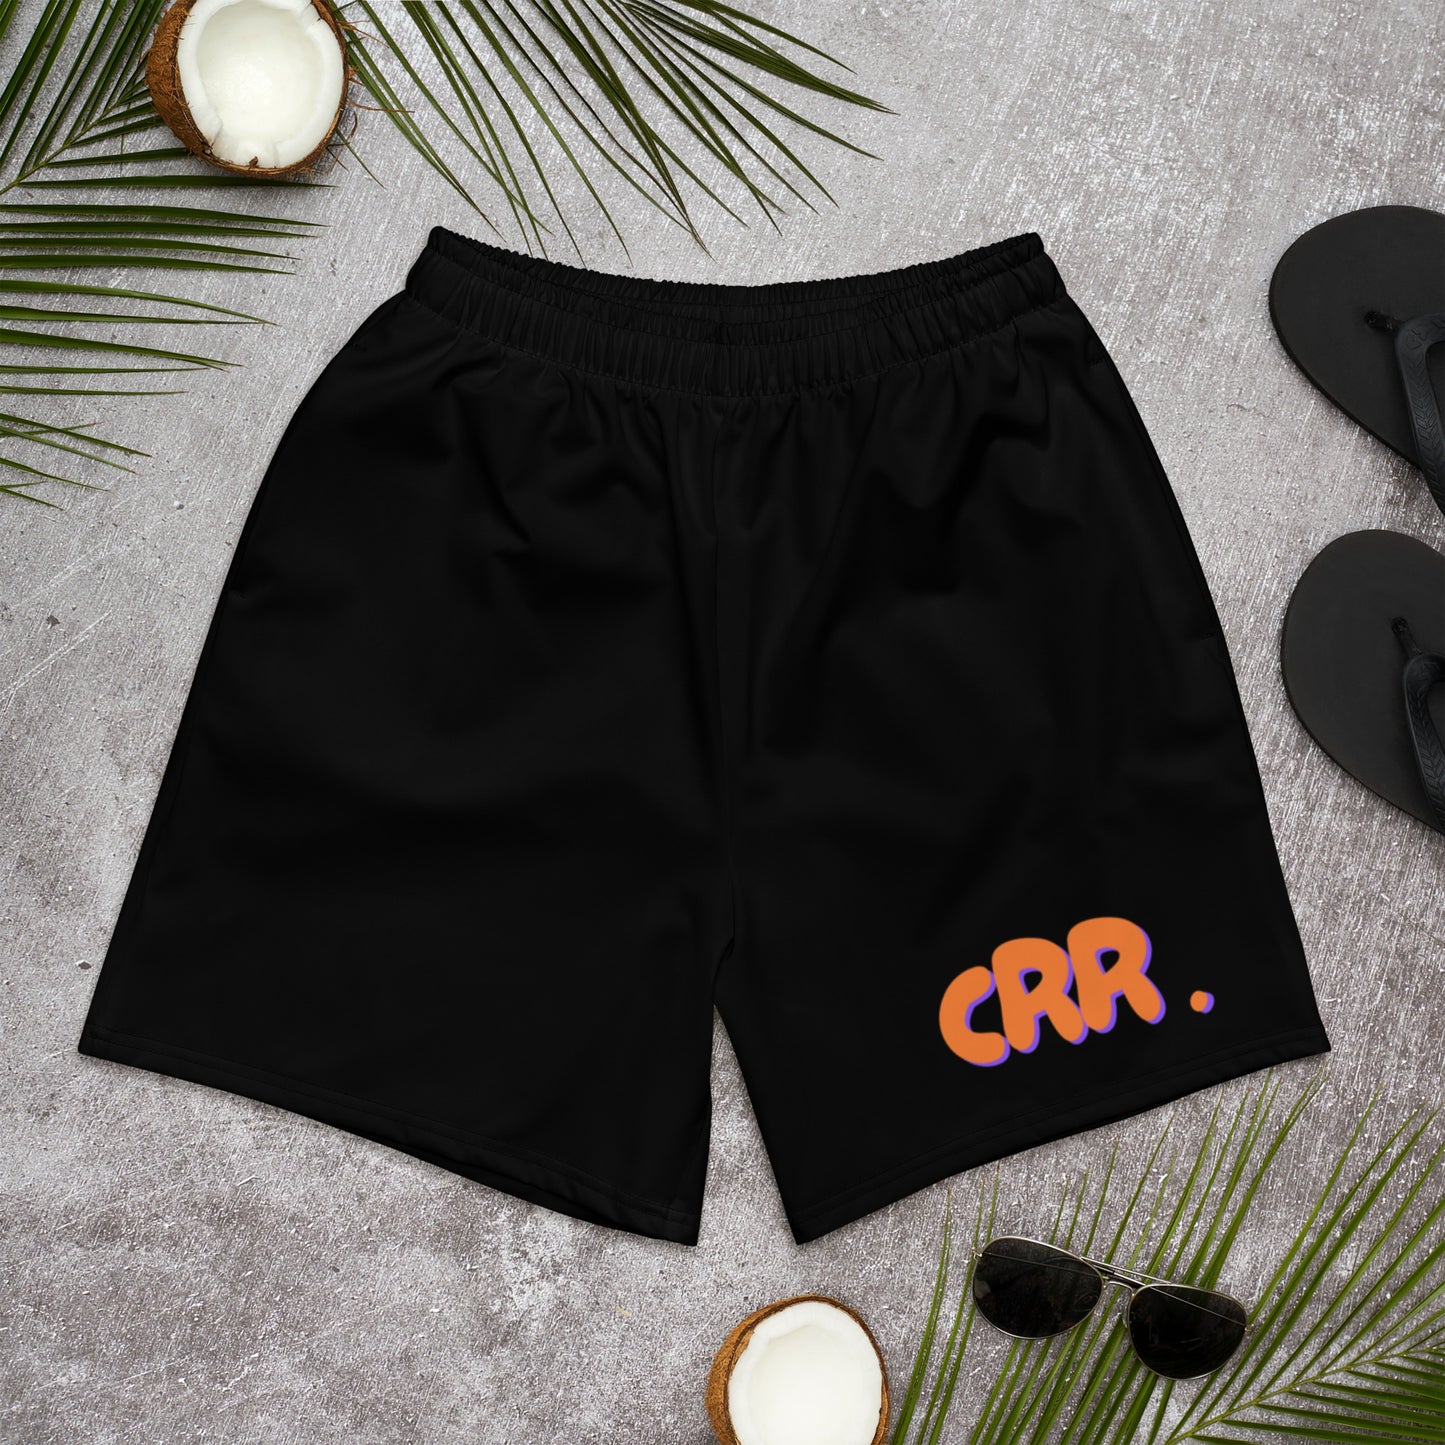 CRR. Black Shorts